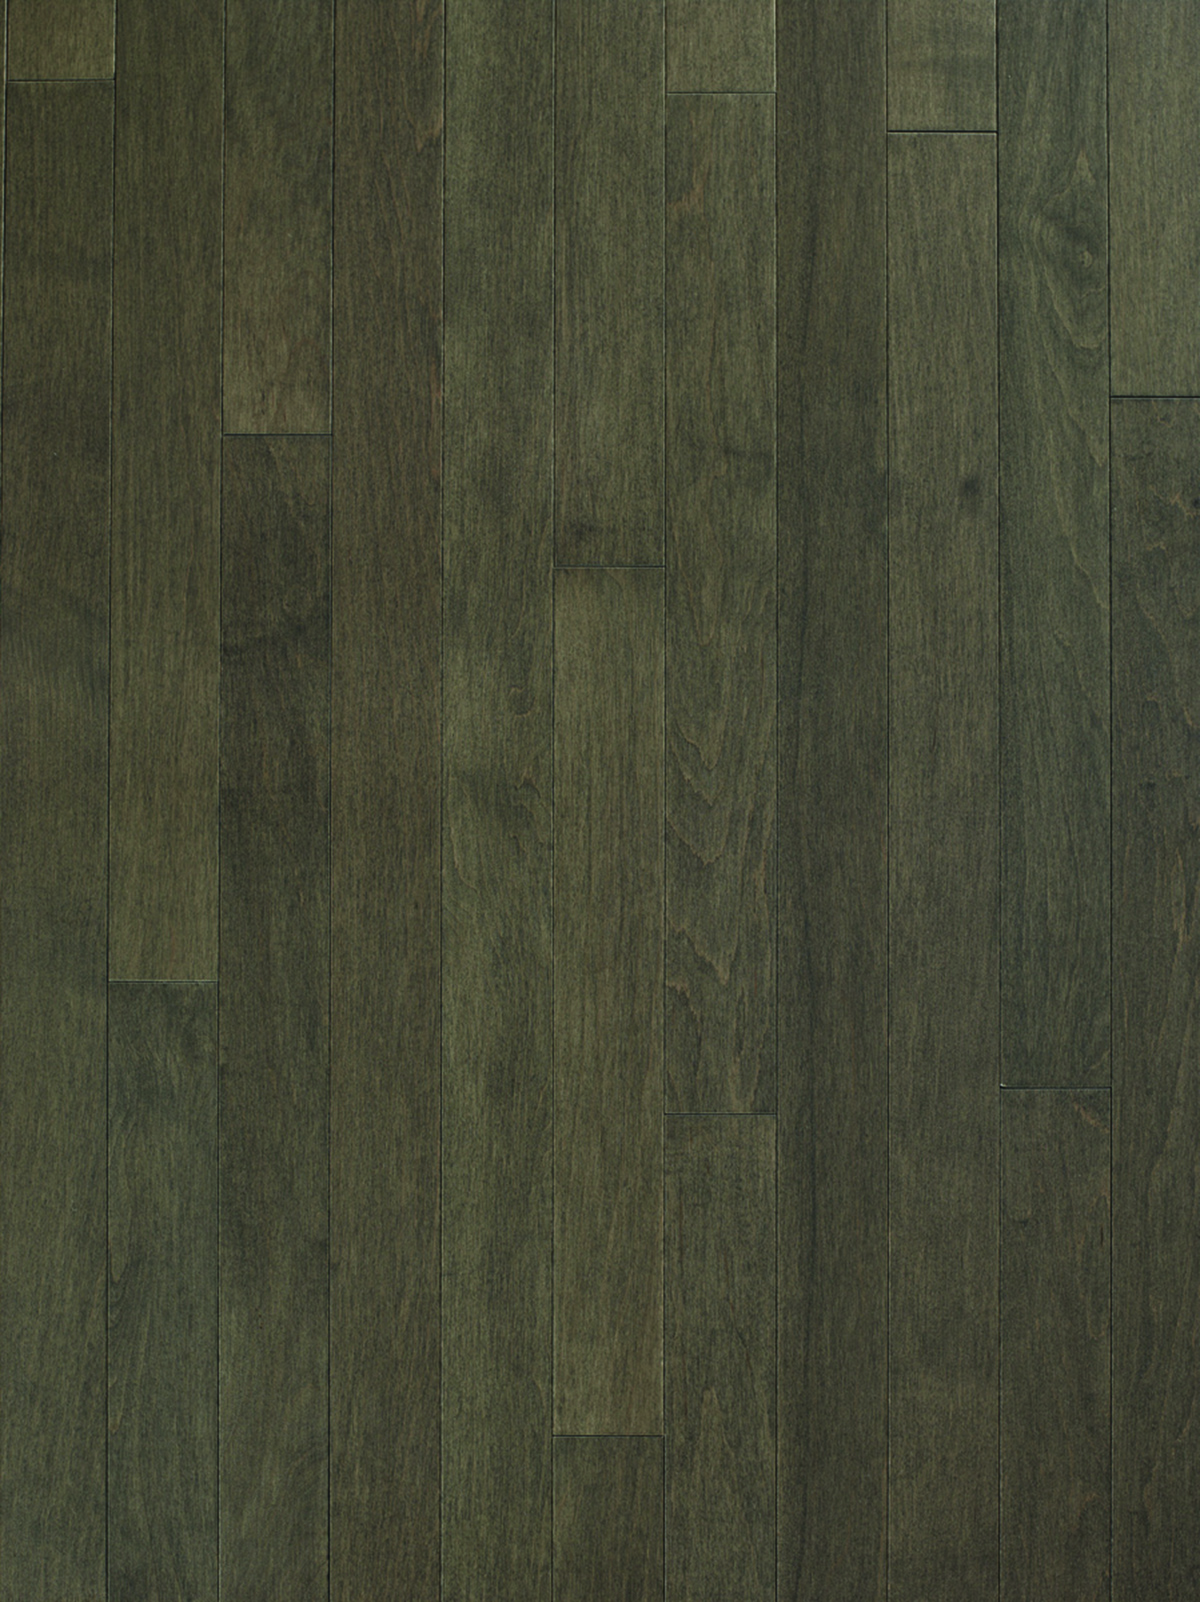 Nebula Maple Boardwalk Hardwood Floors